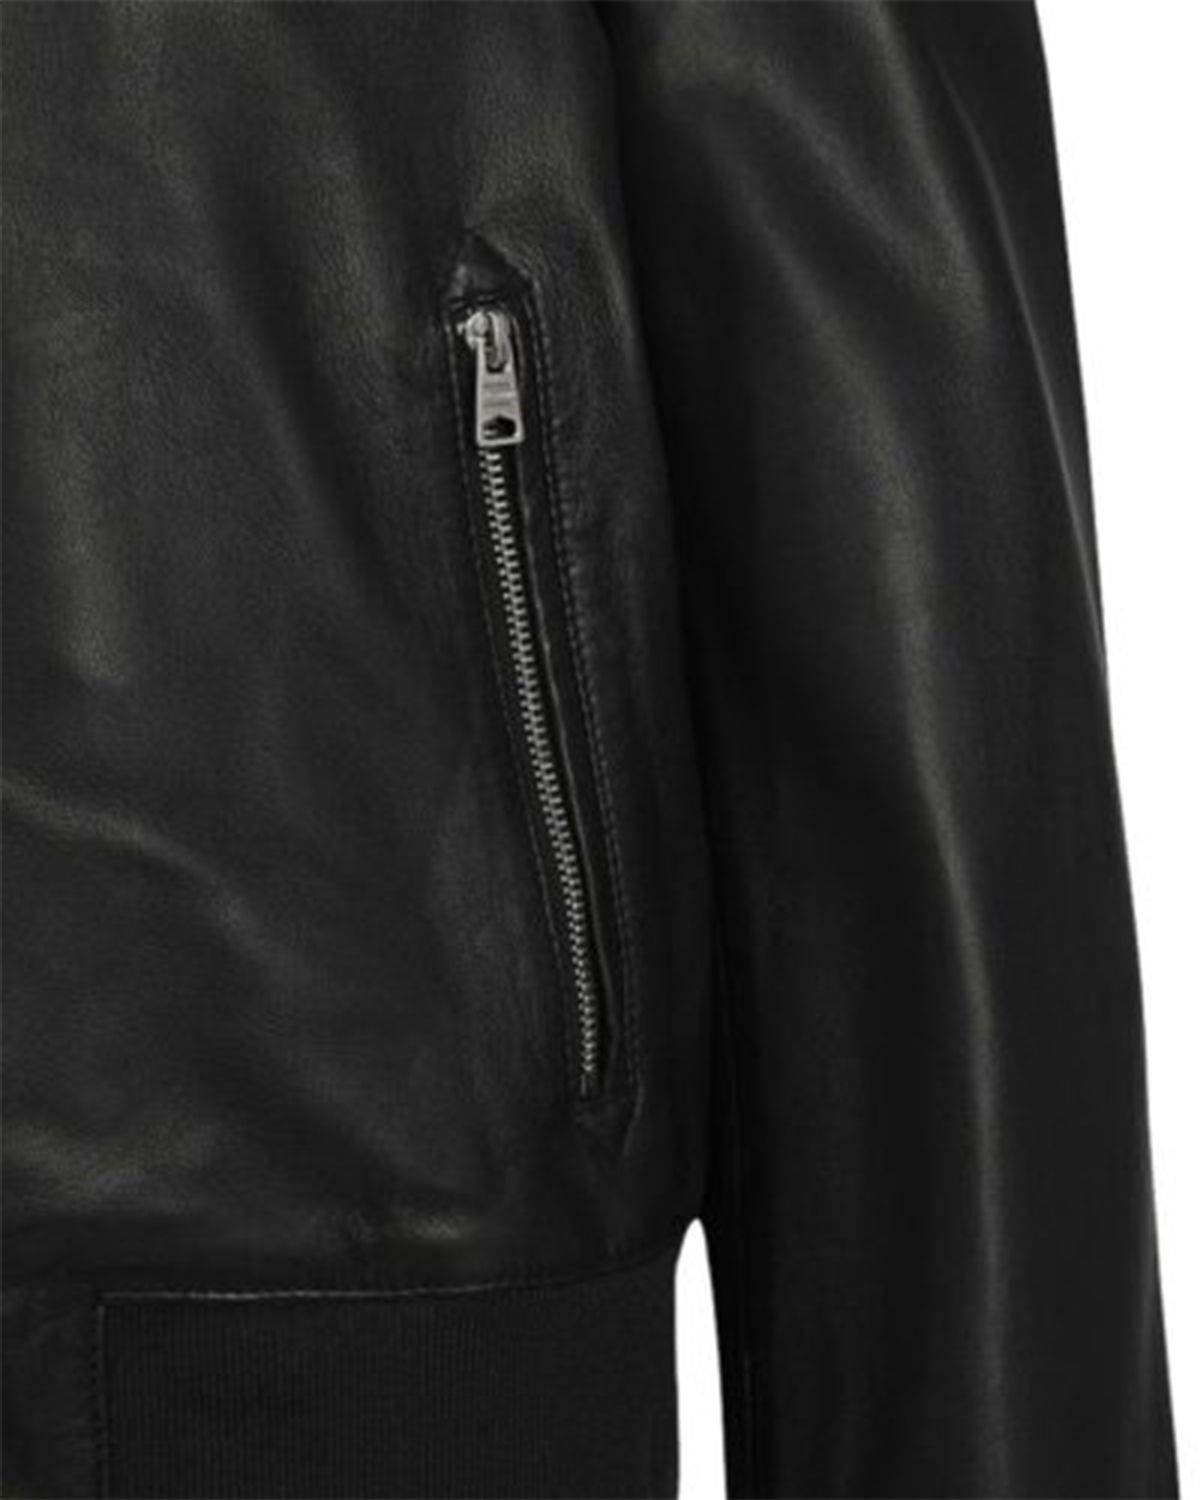 Elite Womens Elegant Black Bomber Leather Jacket